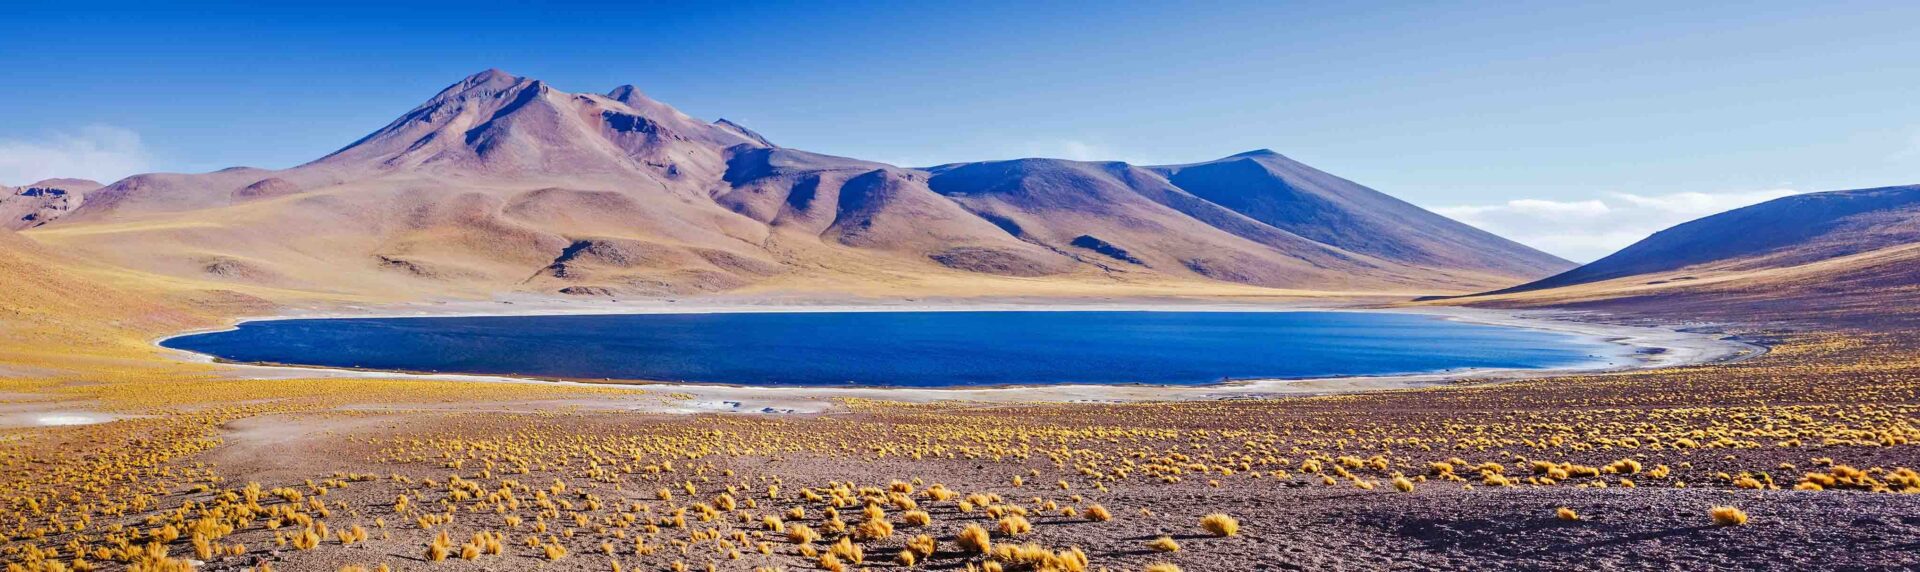 Chile Pano Atacama Desert 790 Atacama Be